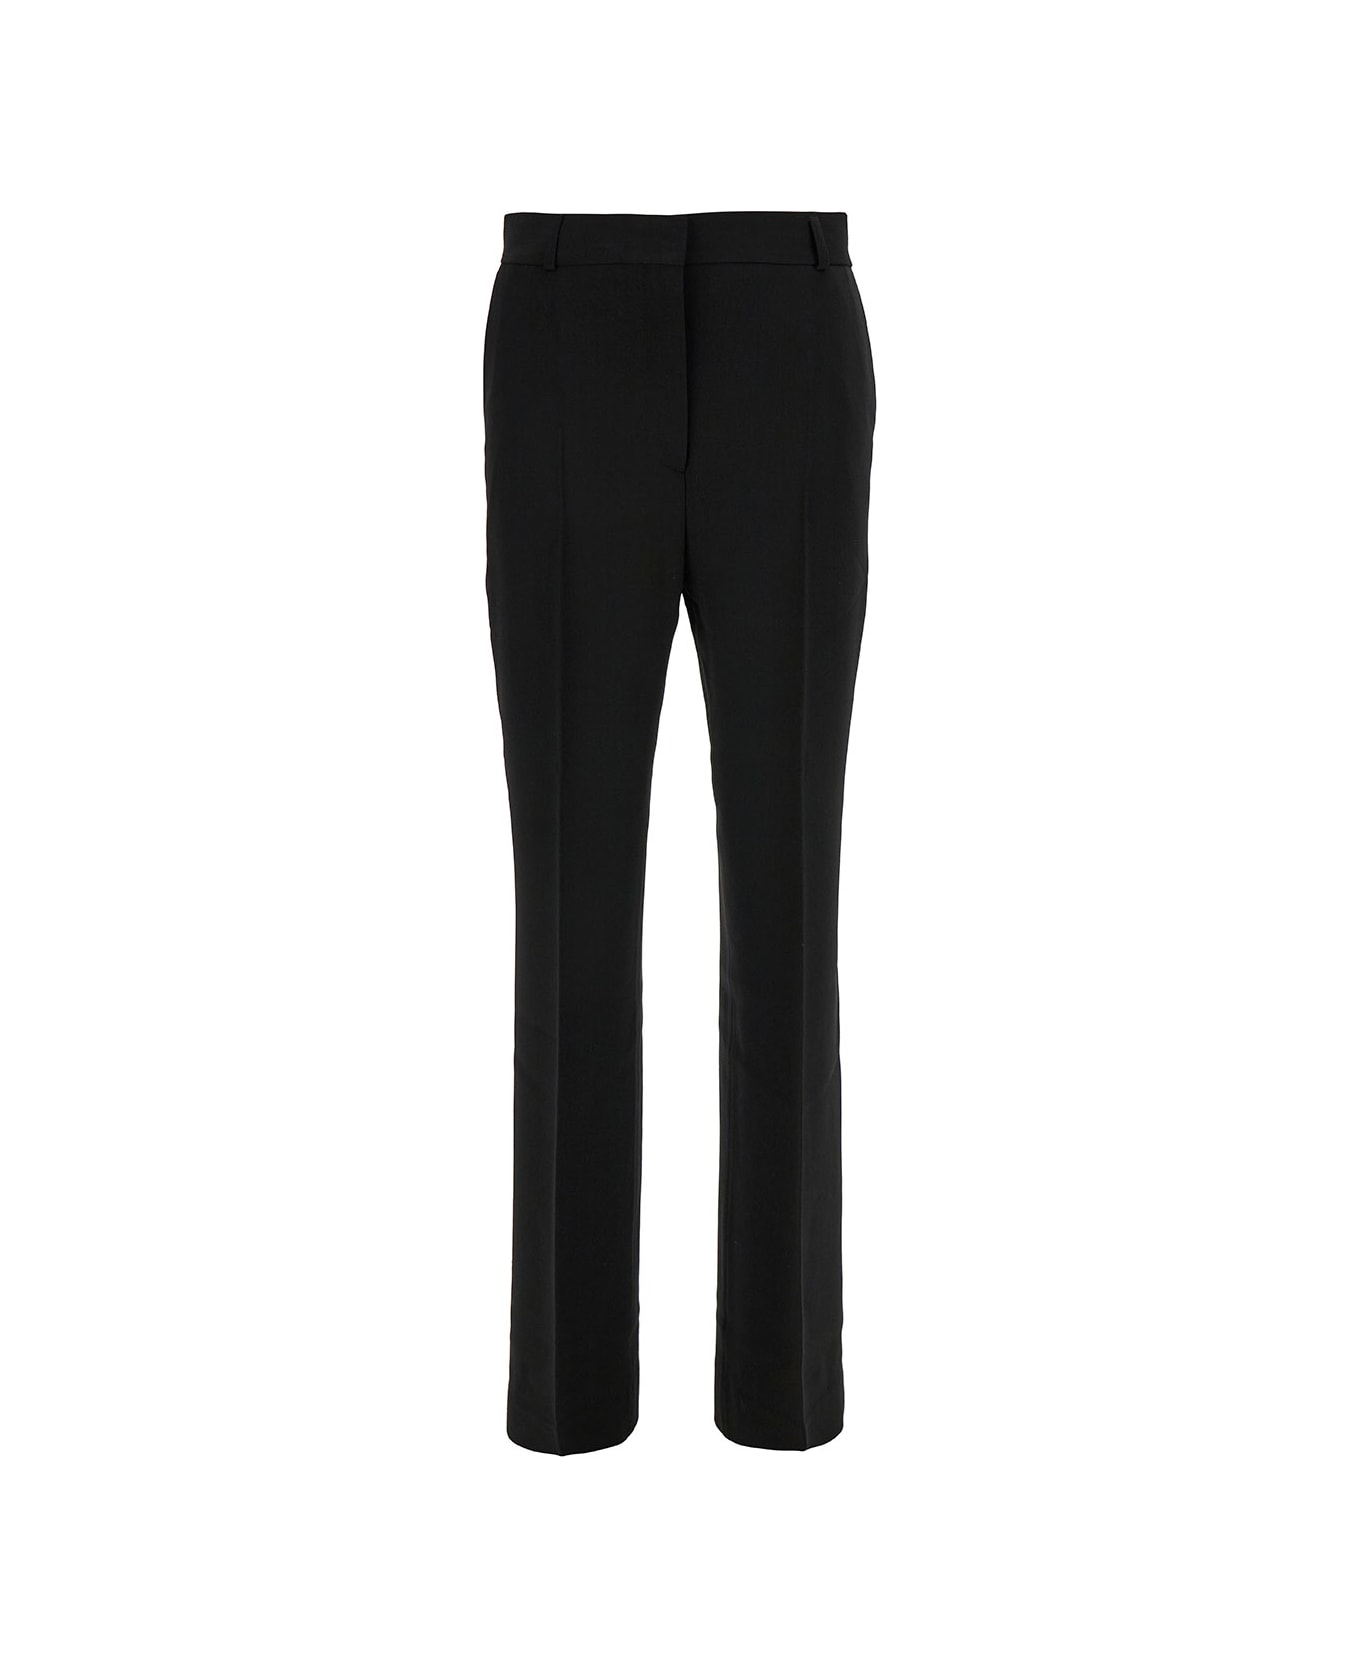 Totême Black Flared Tailored Pants In Viscose Blend Woman - Black